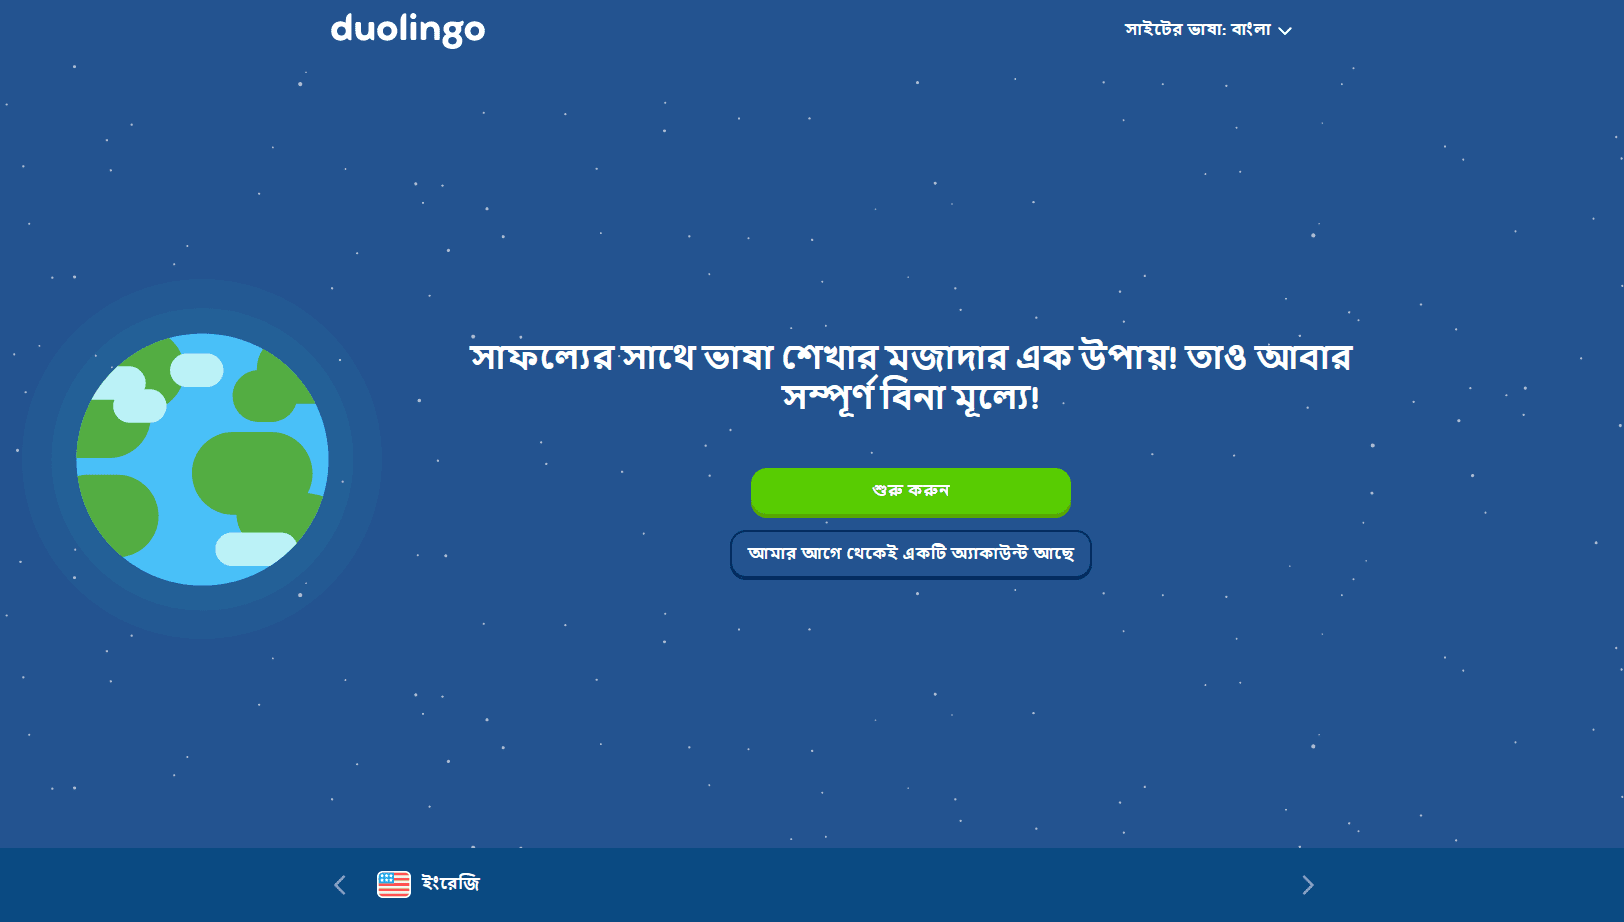 Duolingo site in Hindi